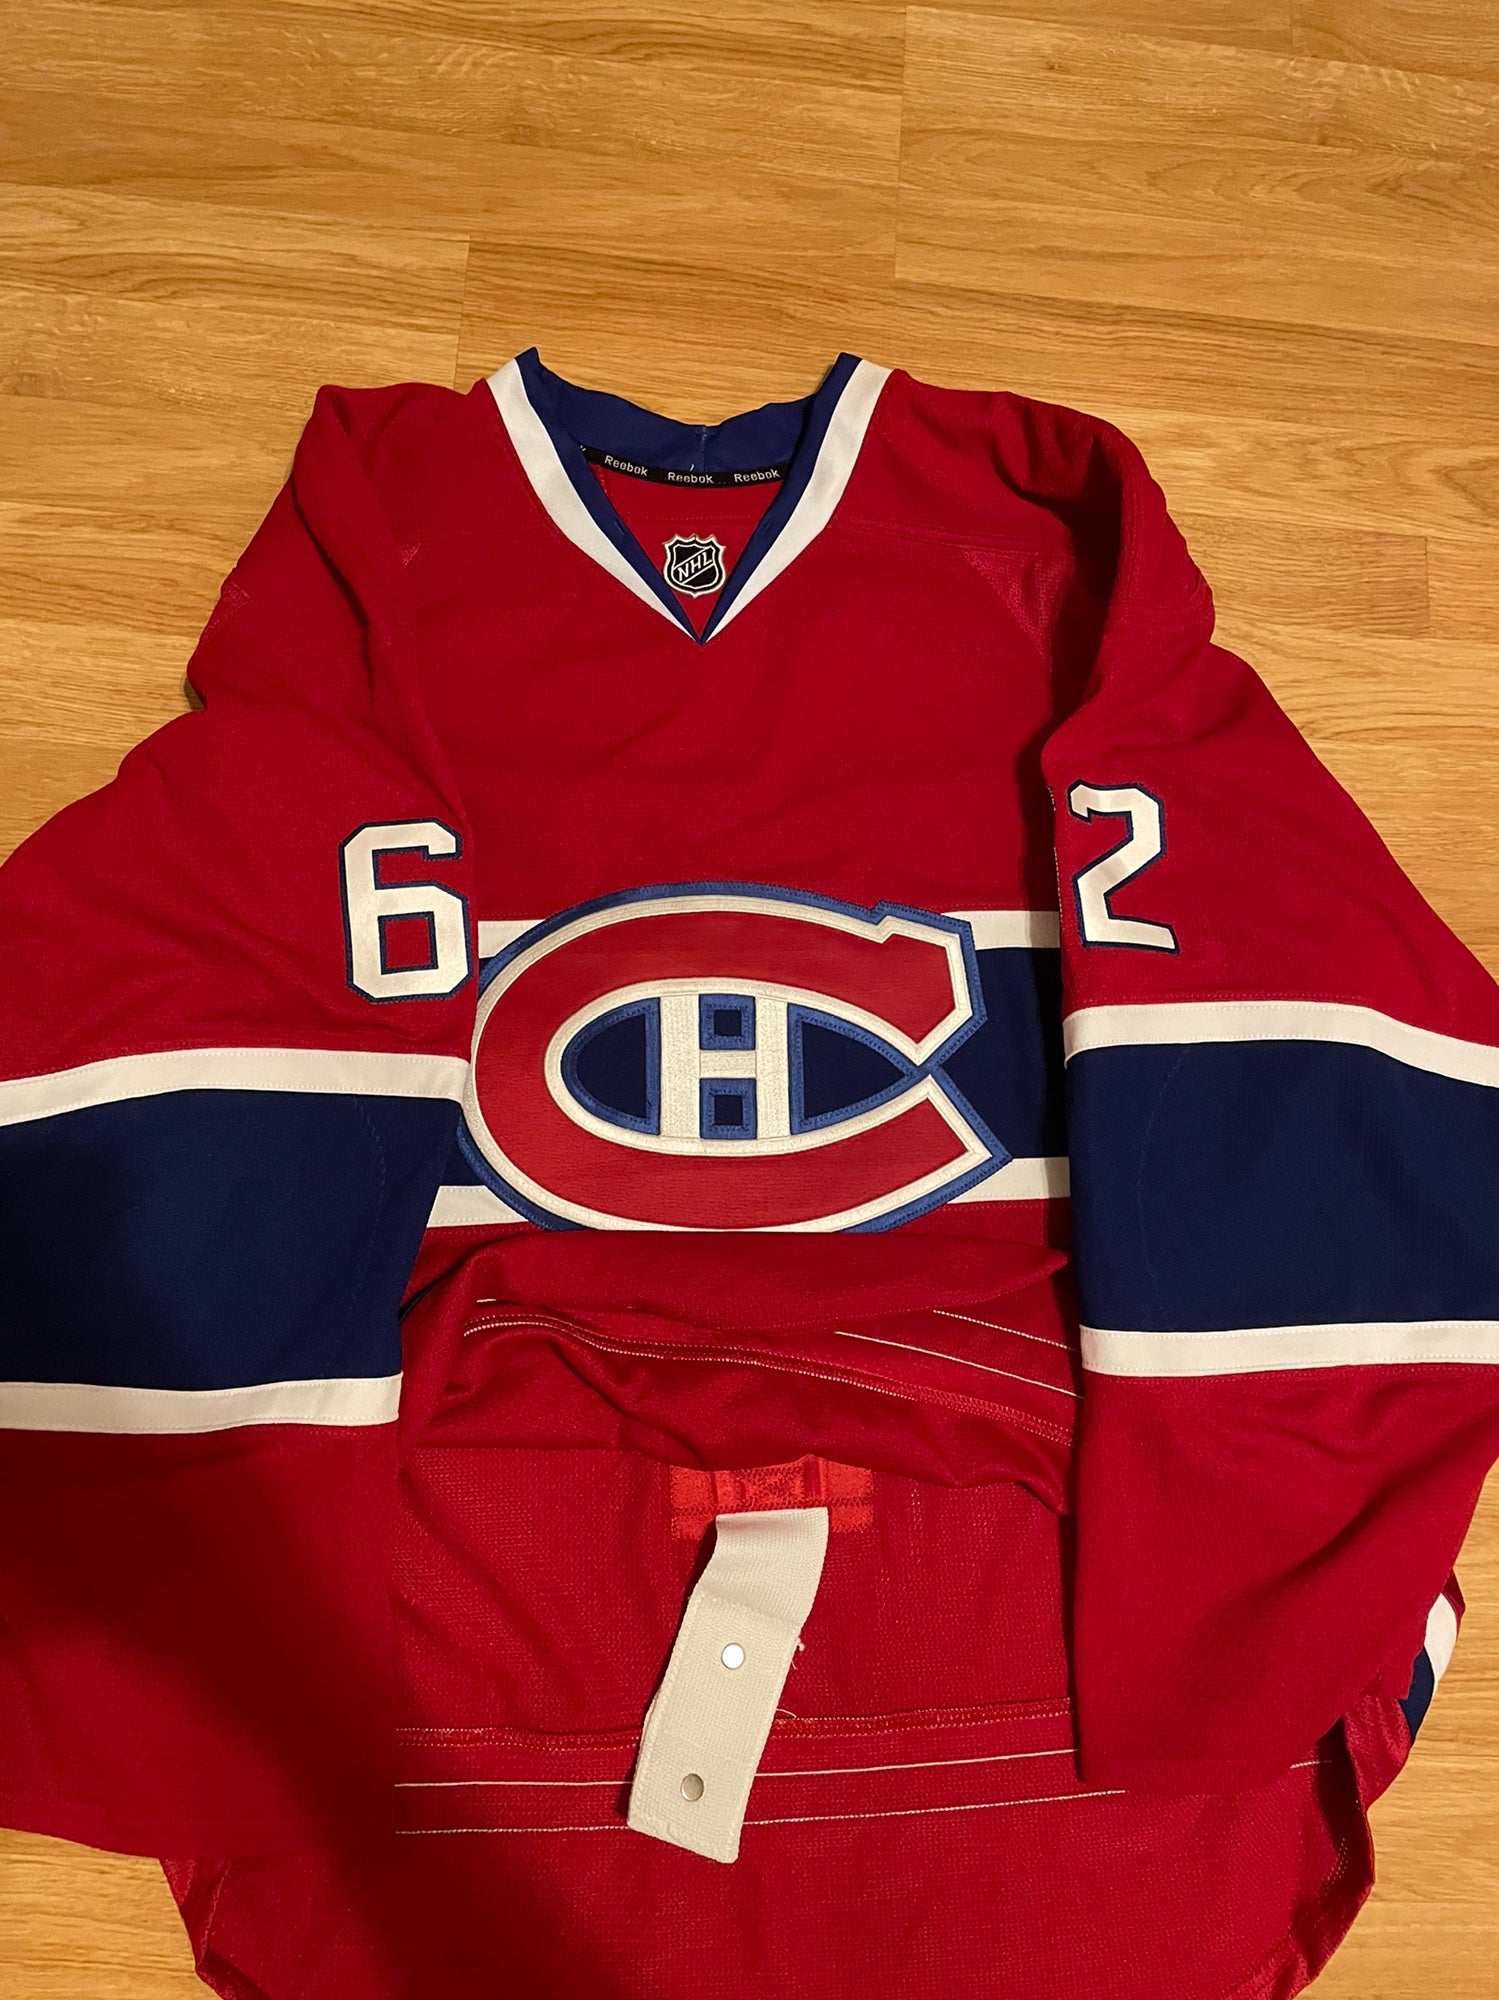 Montreal Canadiens Reebok Hockey Jersey Size Medium White NHL